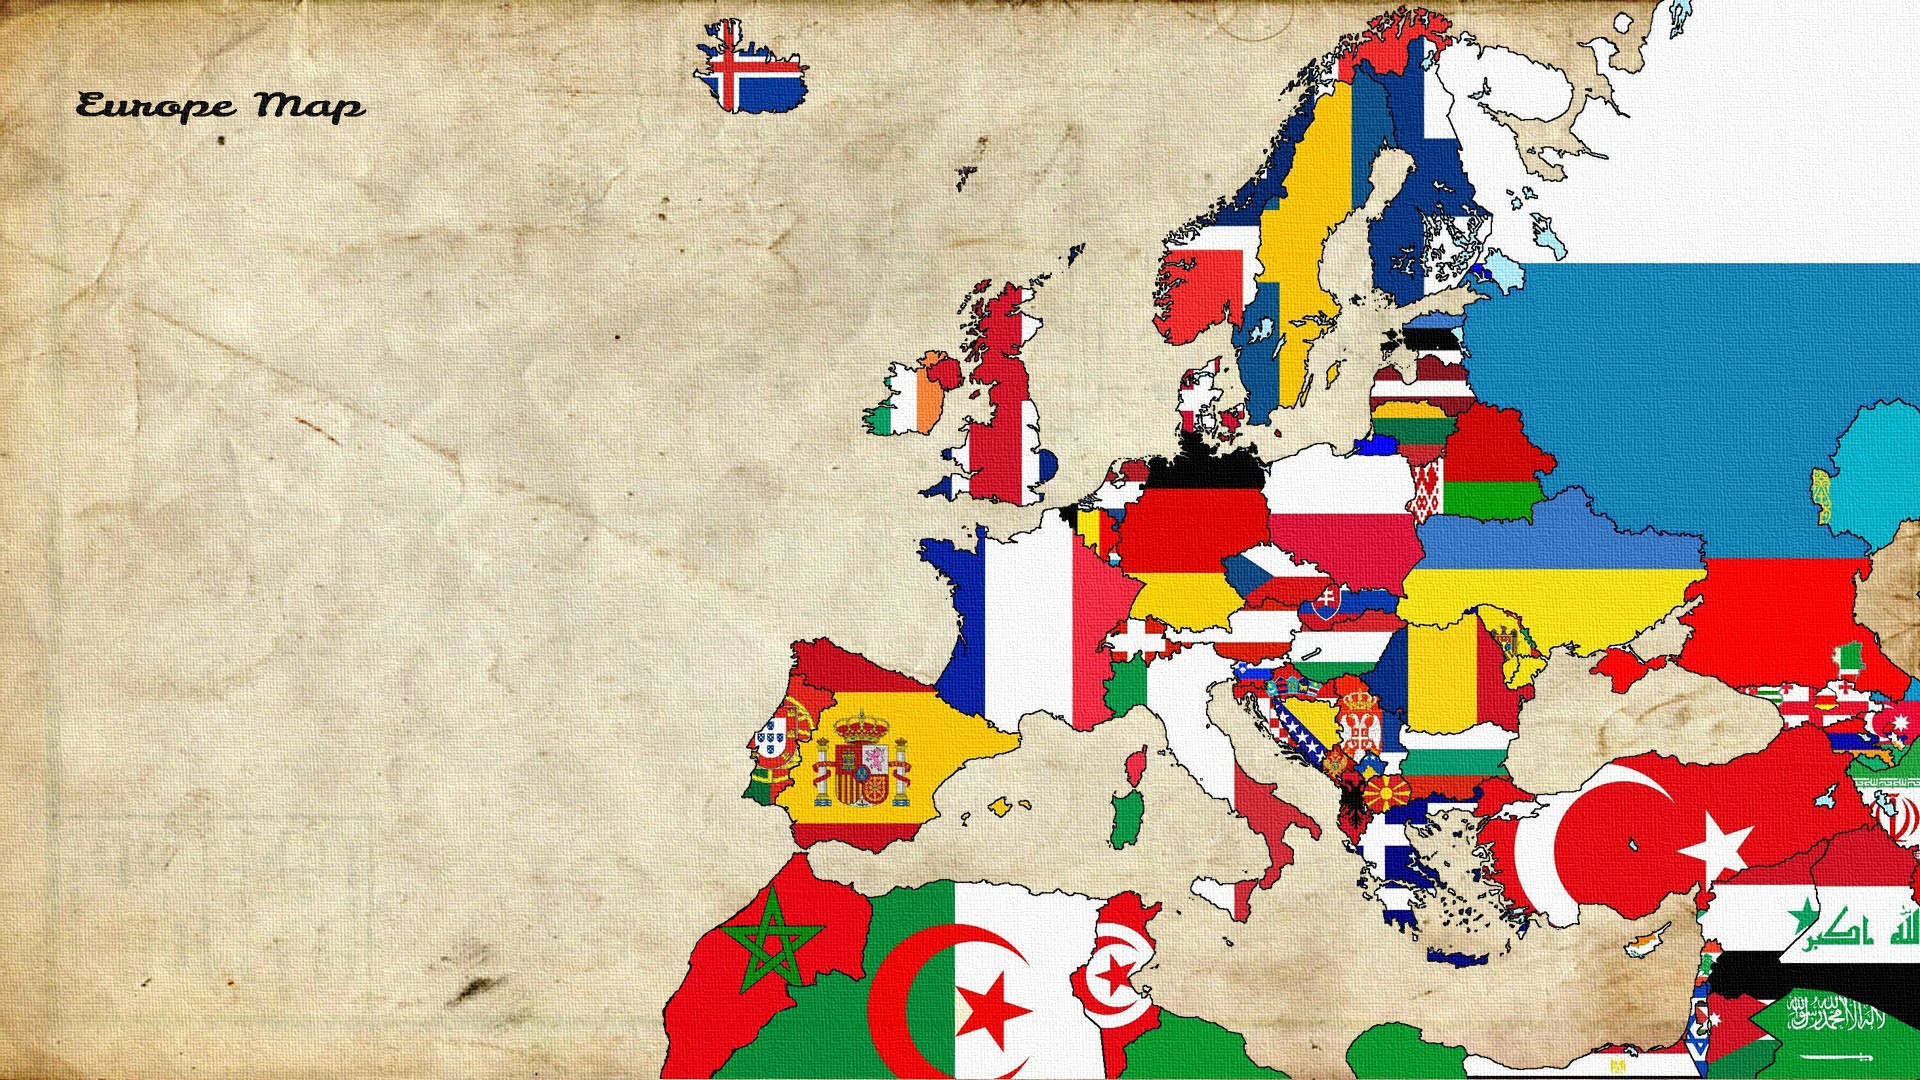 1920x1080 map europe old map flag wallpaper JPG 828 kB Gallery HD Wallpaper